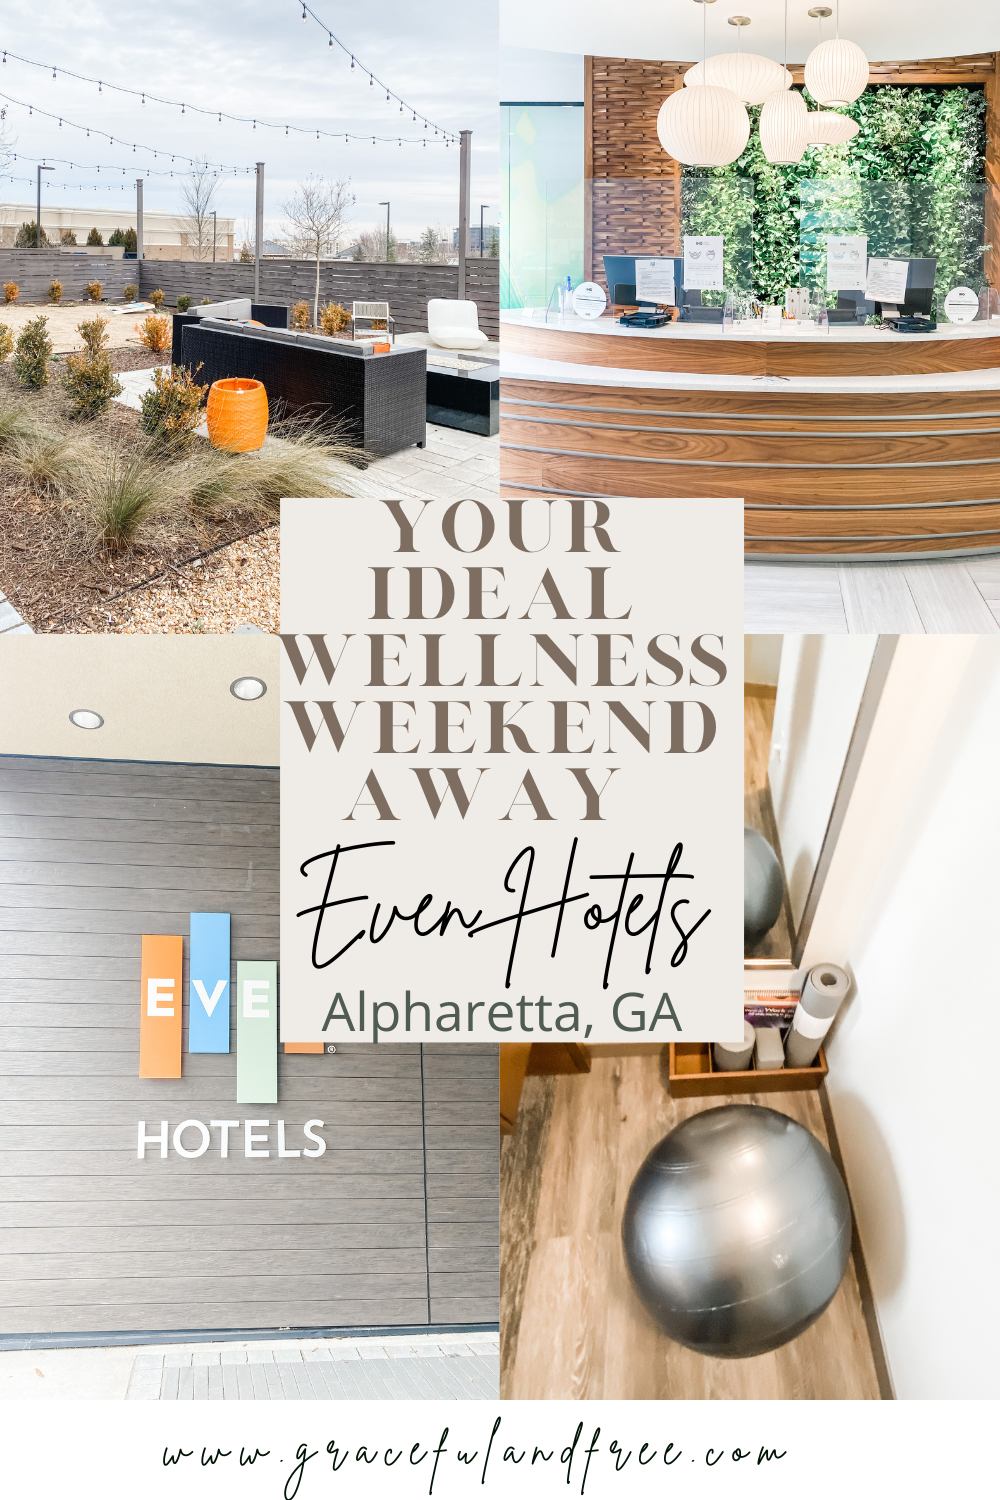 Ideal Weekend Away Even Hotels Alpharetta GA staycation #staycation #georgiatravel #alpharetta